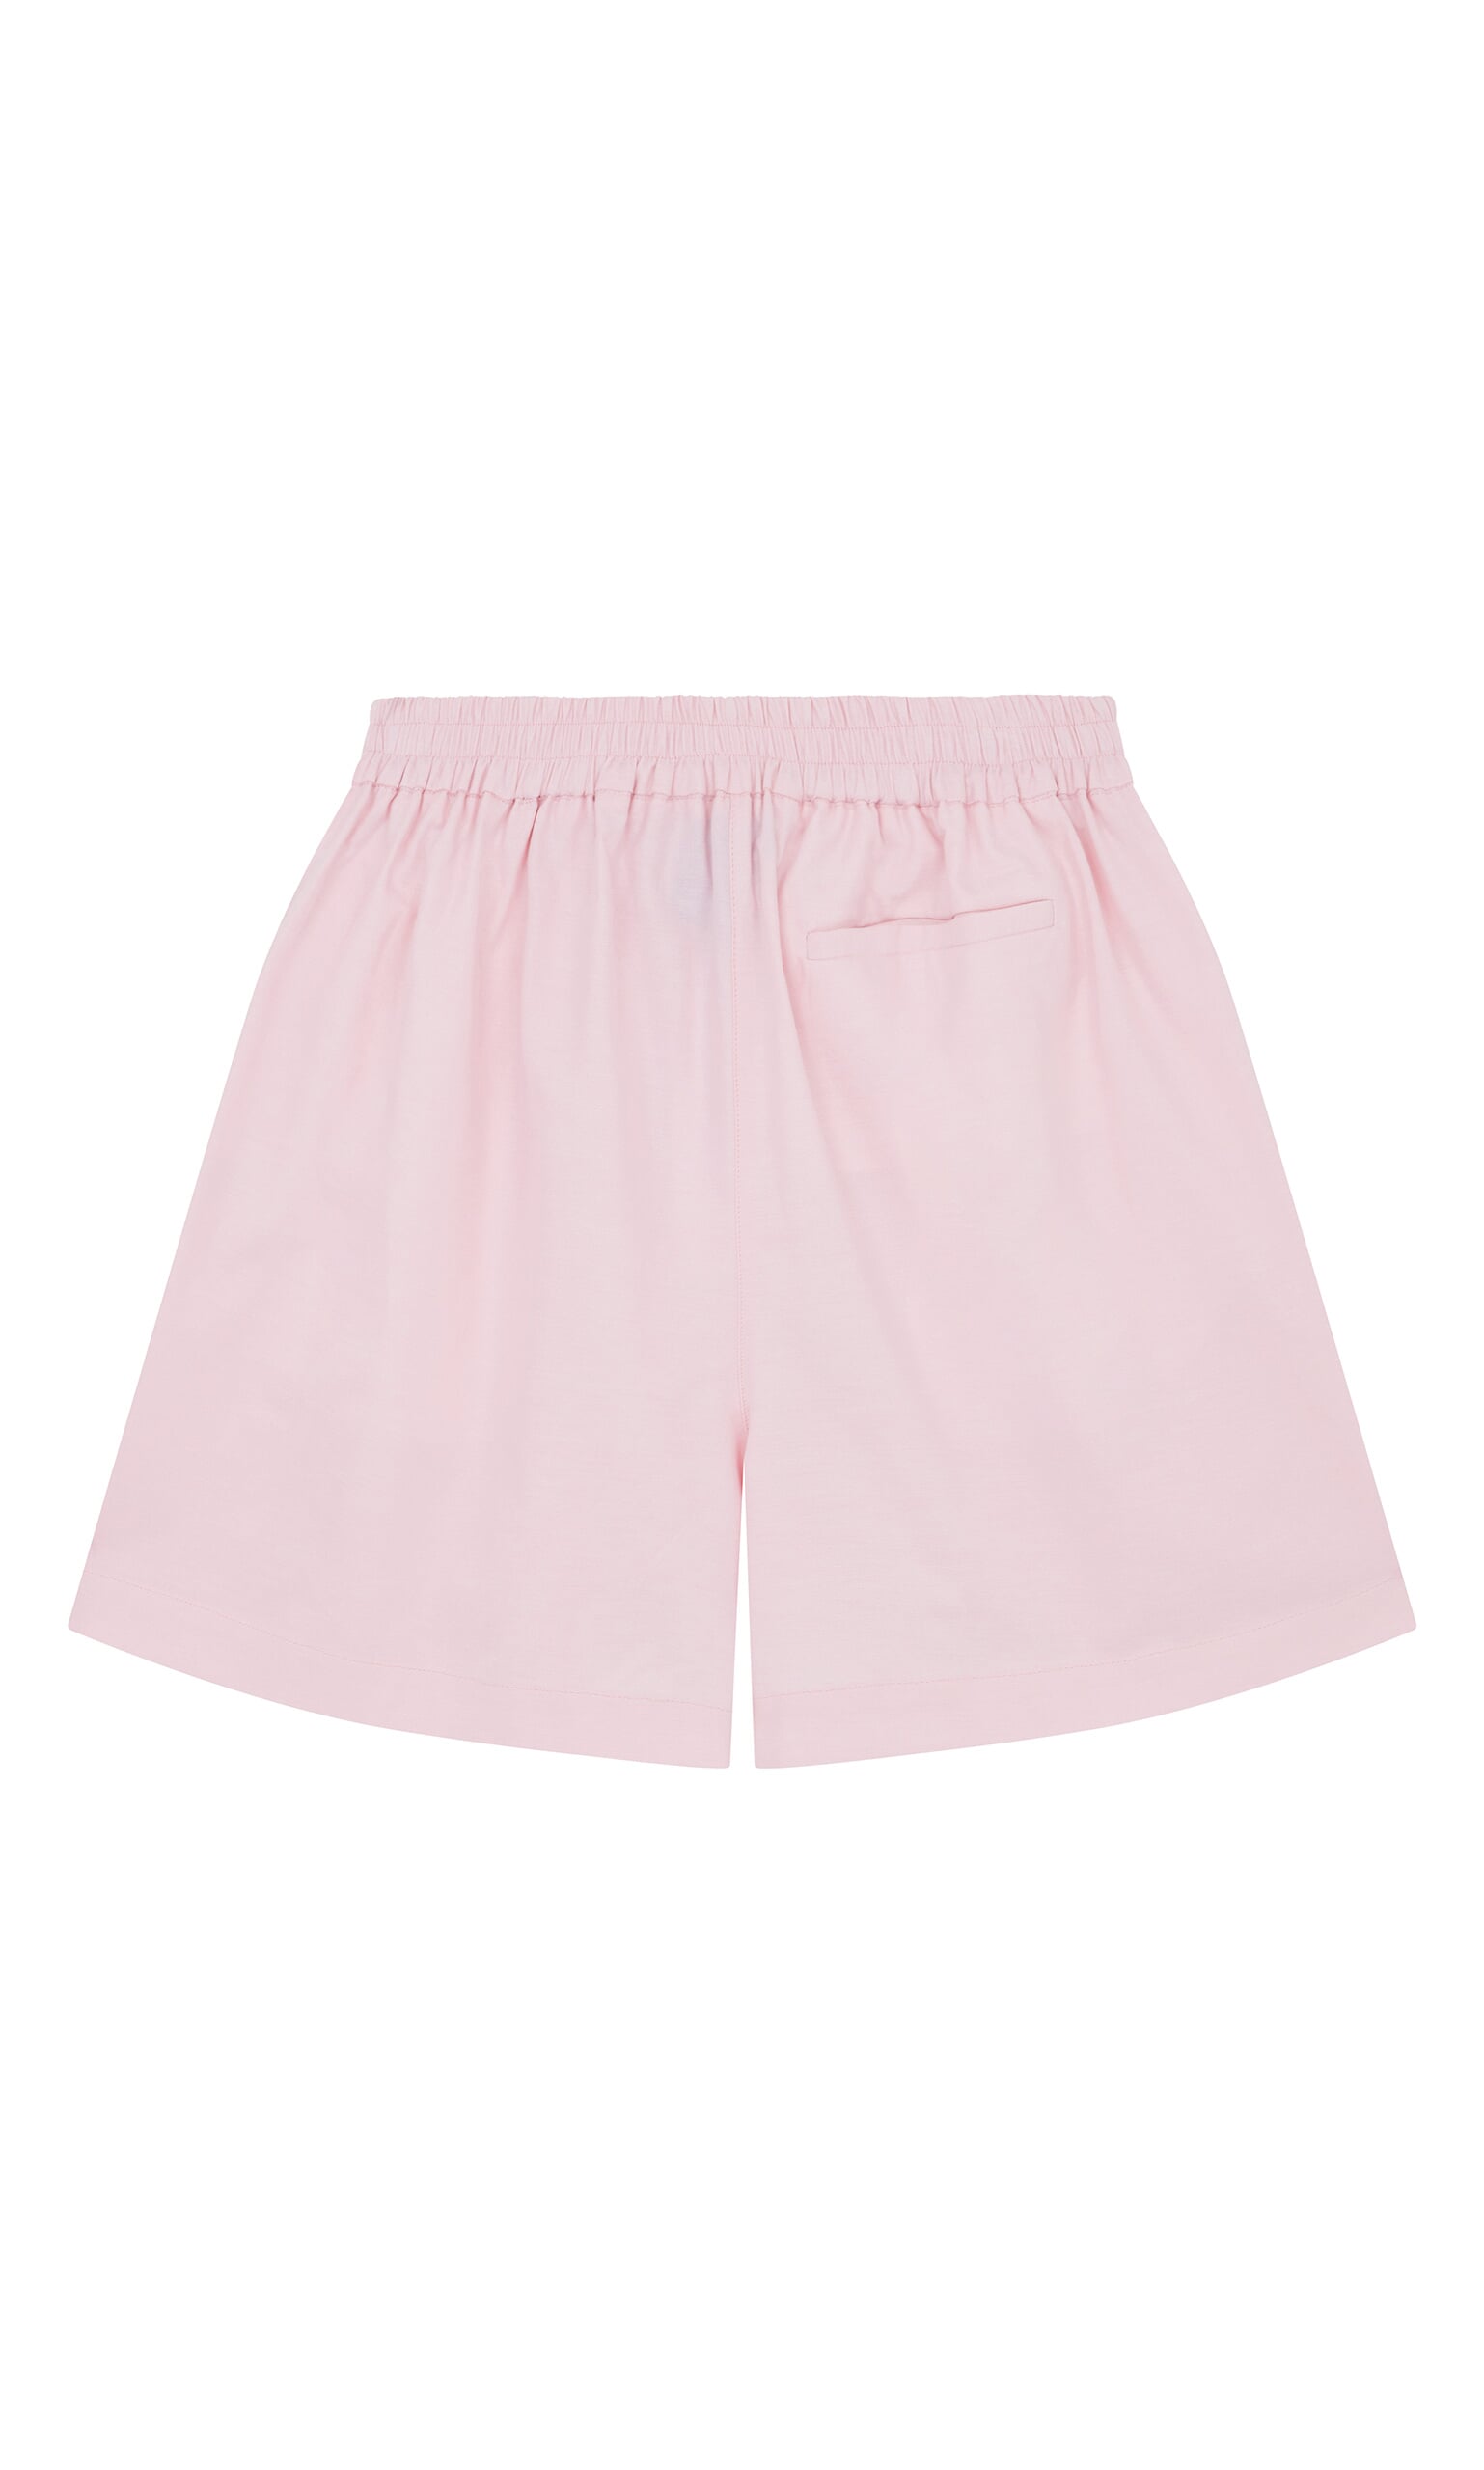 Pegwell shorts - Plümo Ltd